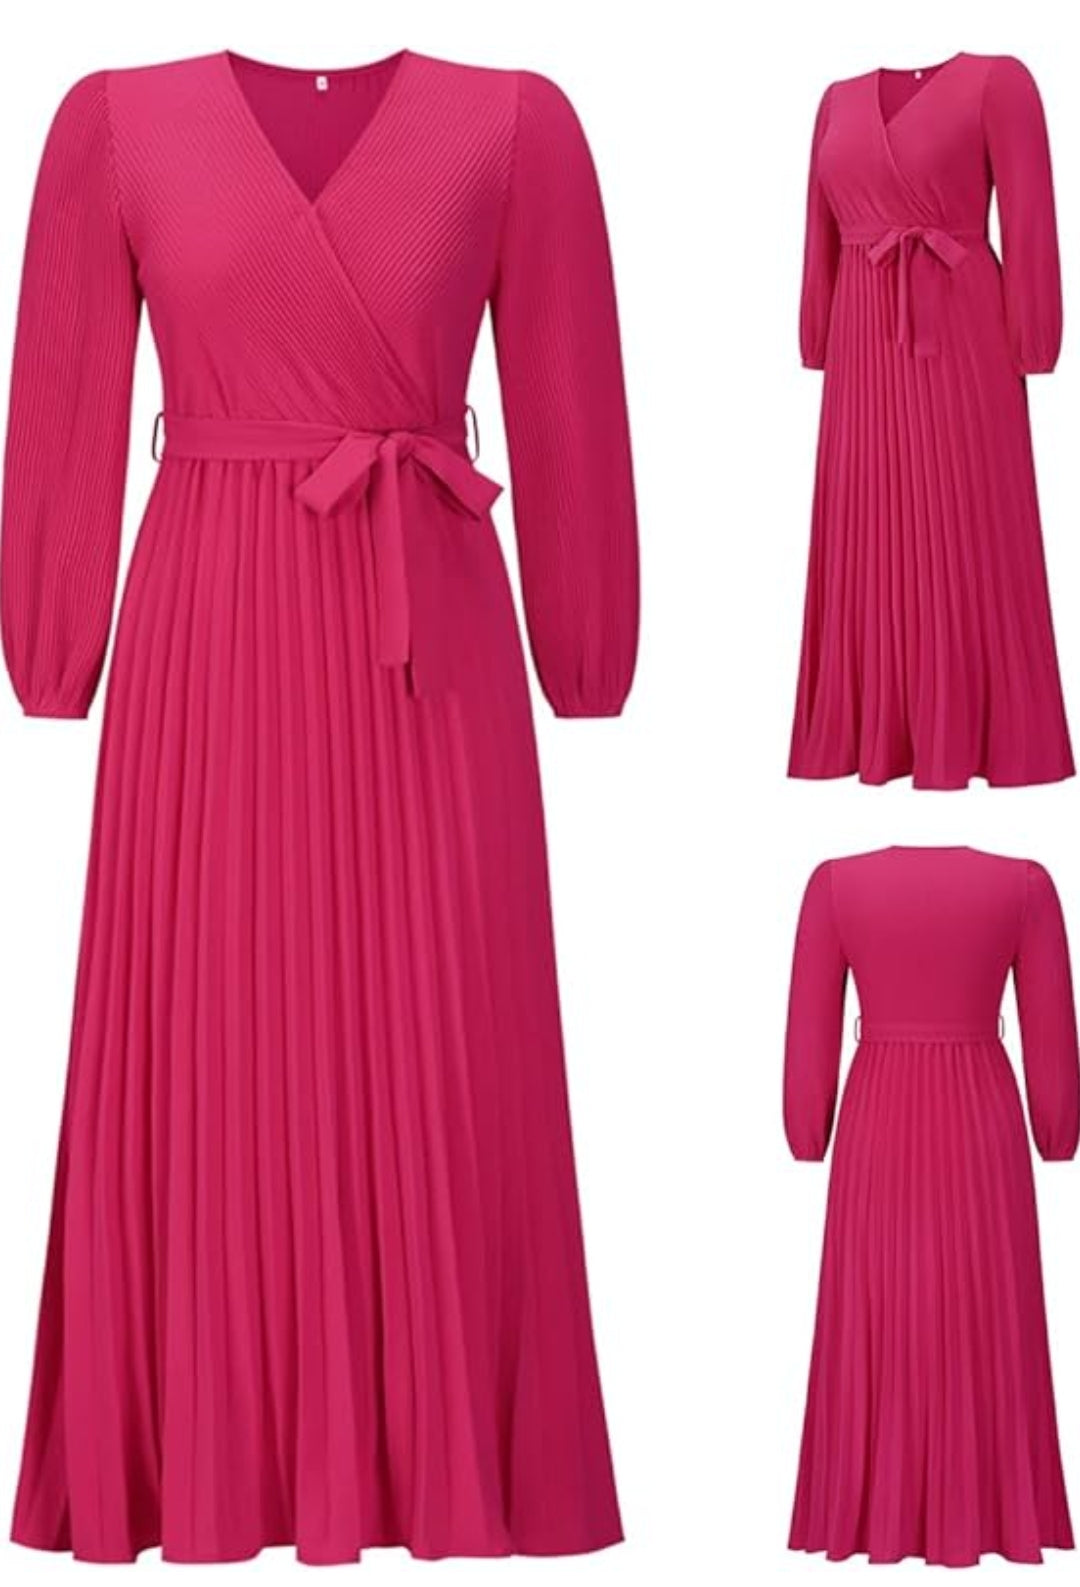 Size Medium Pink Pleated Maxi Dress with Sash